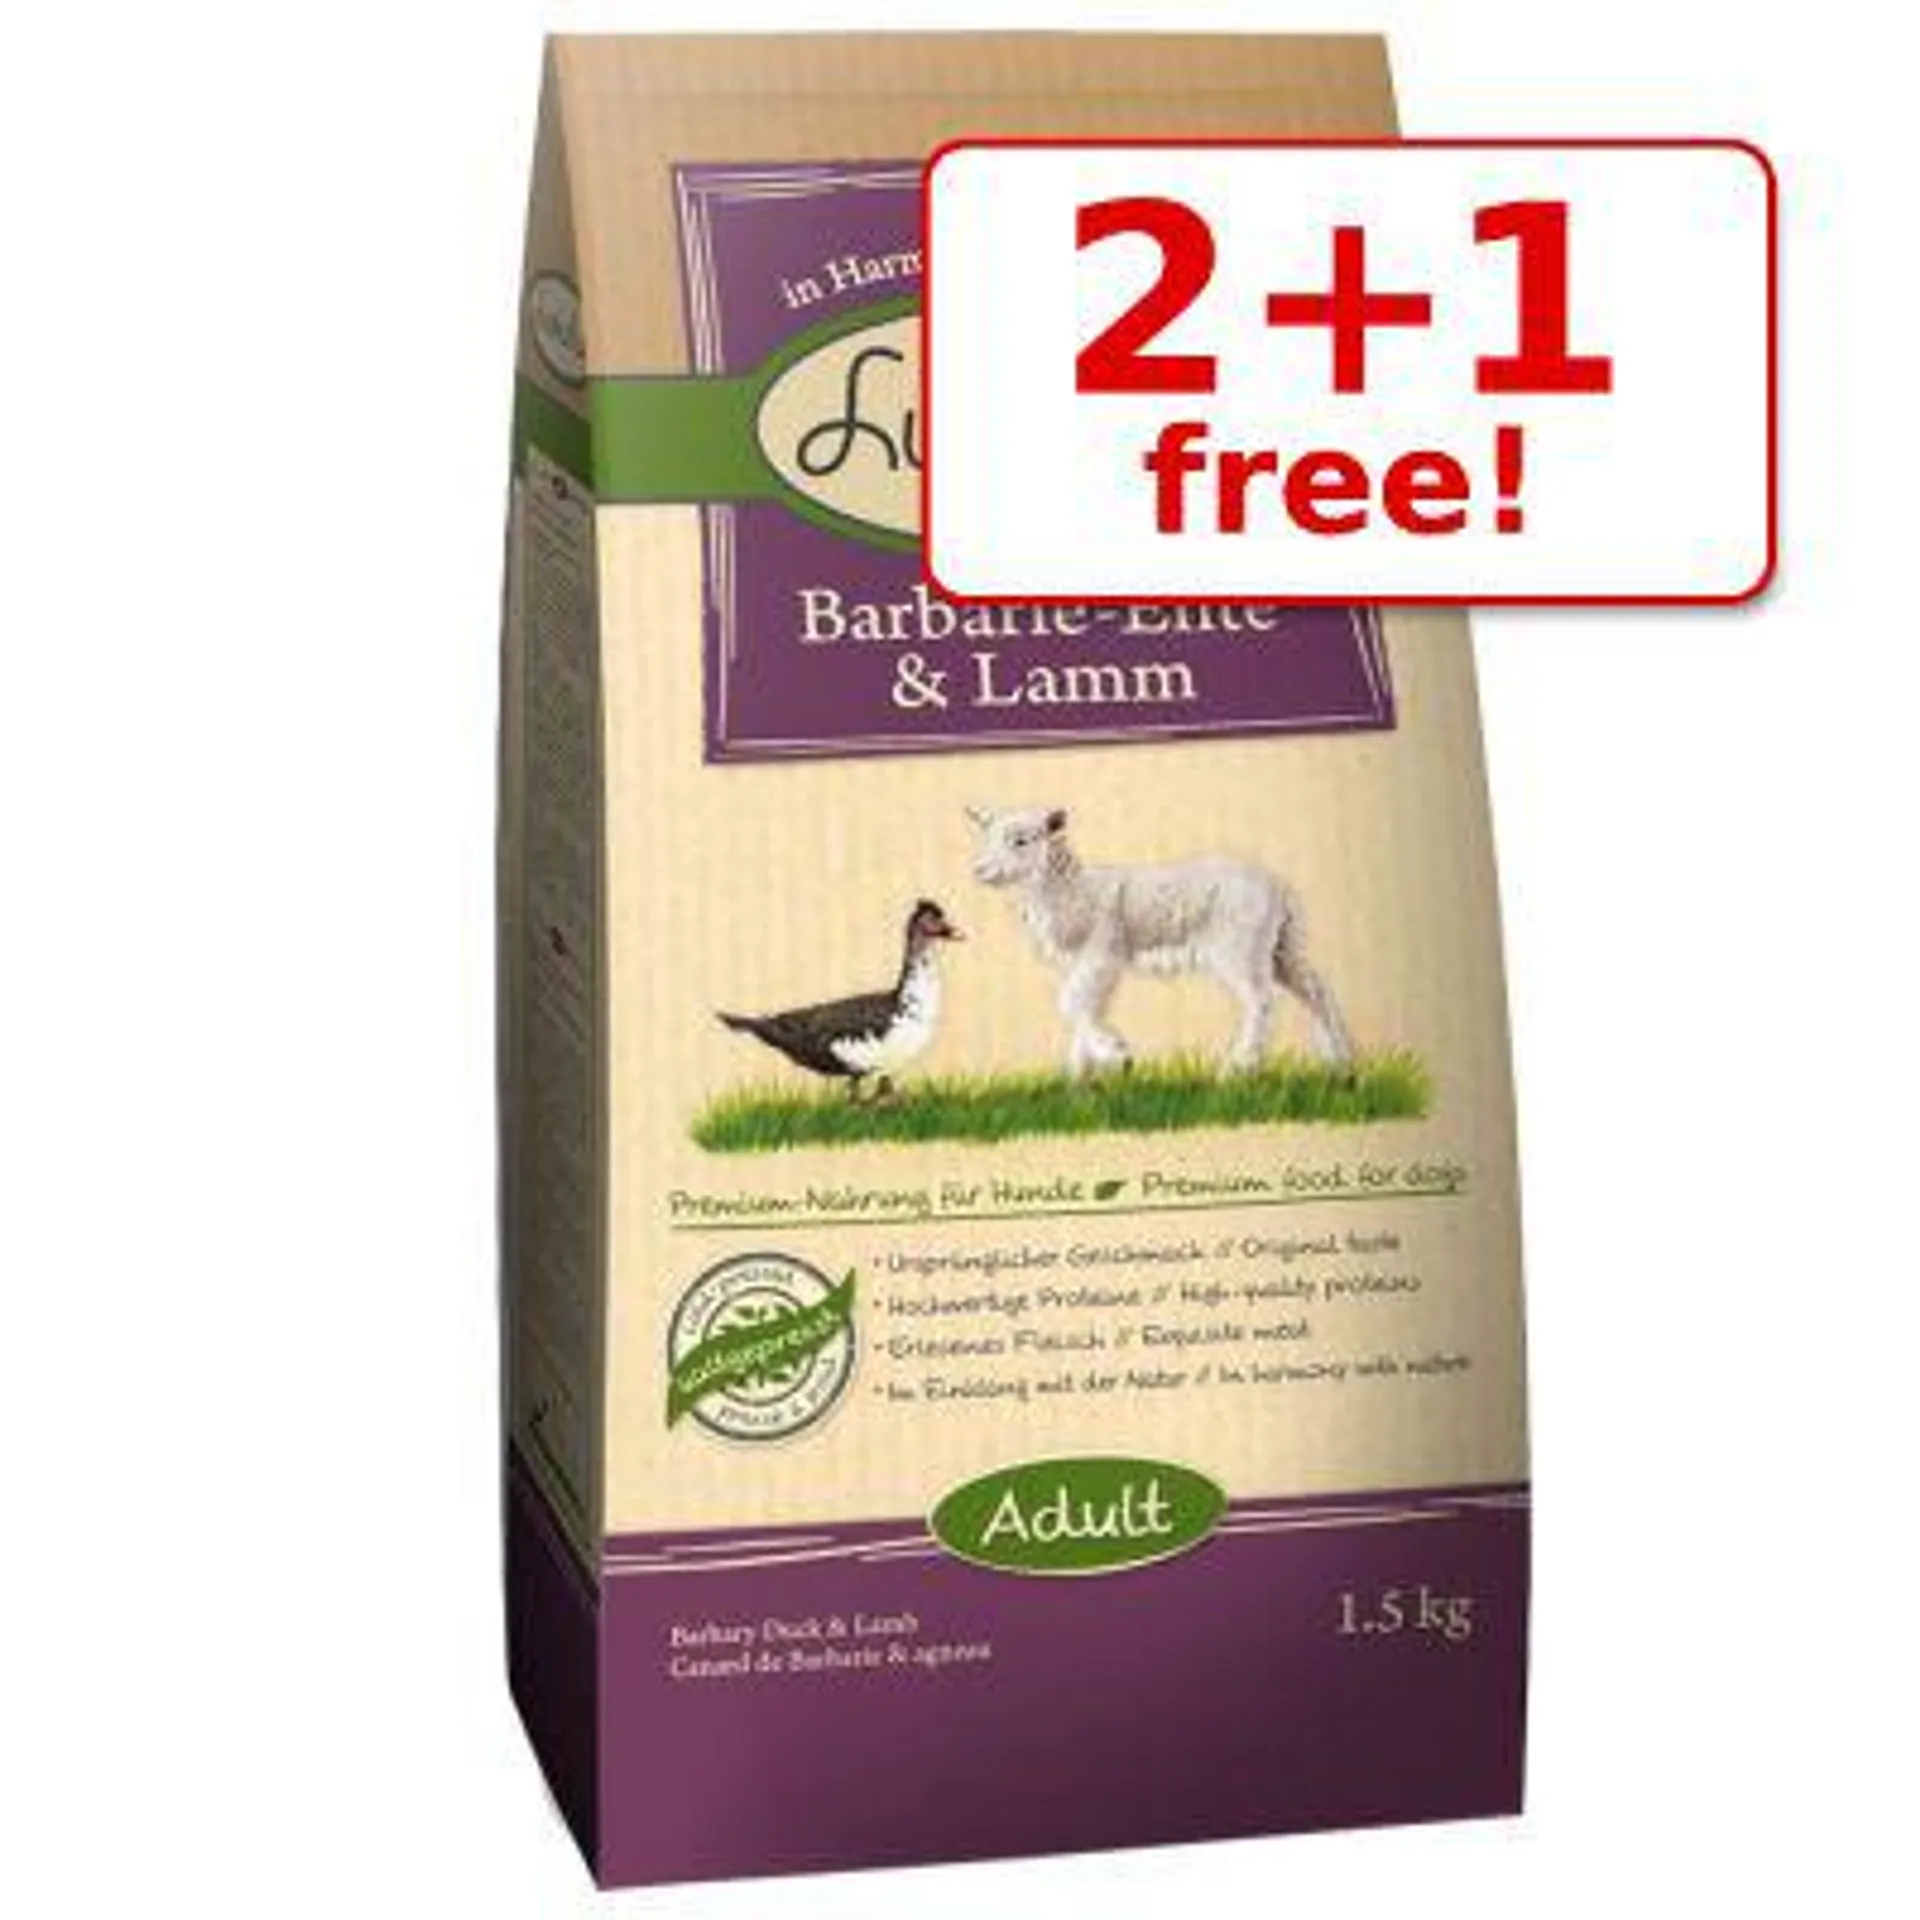 3 x 1.5kg Lukullus Dry Dog Food - 2 + 1 Free!*